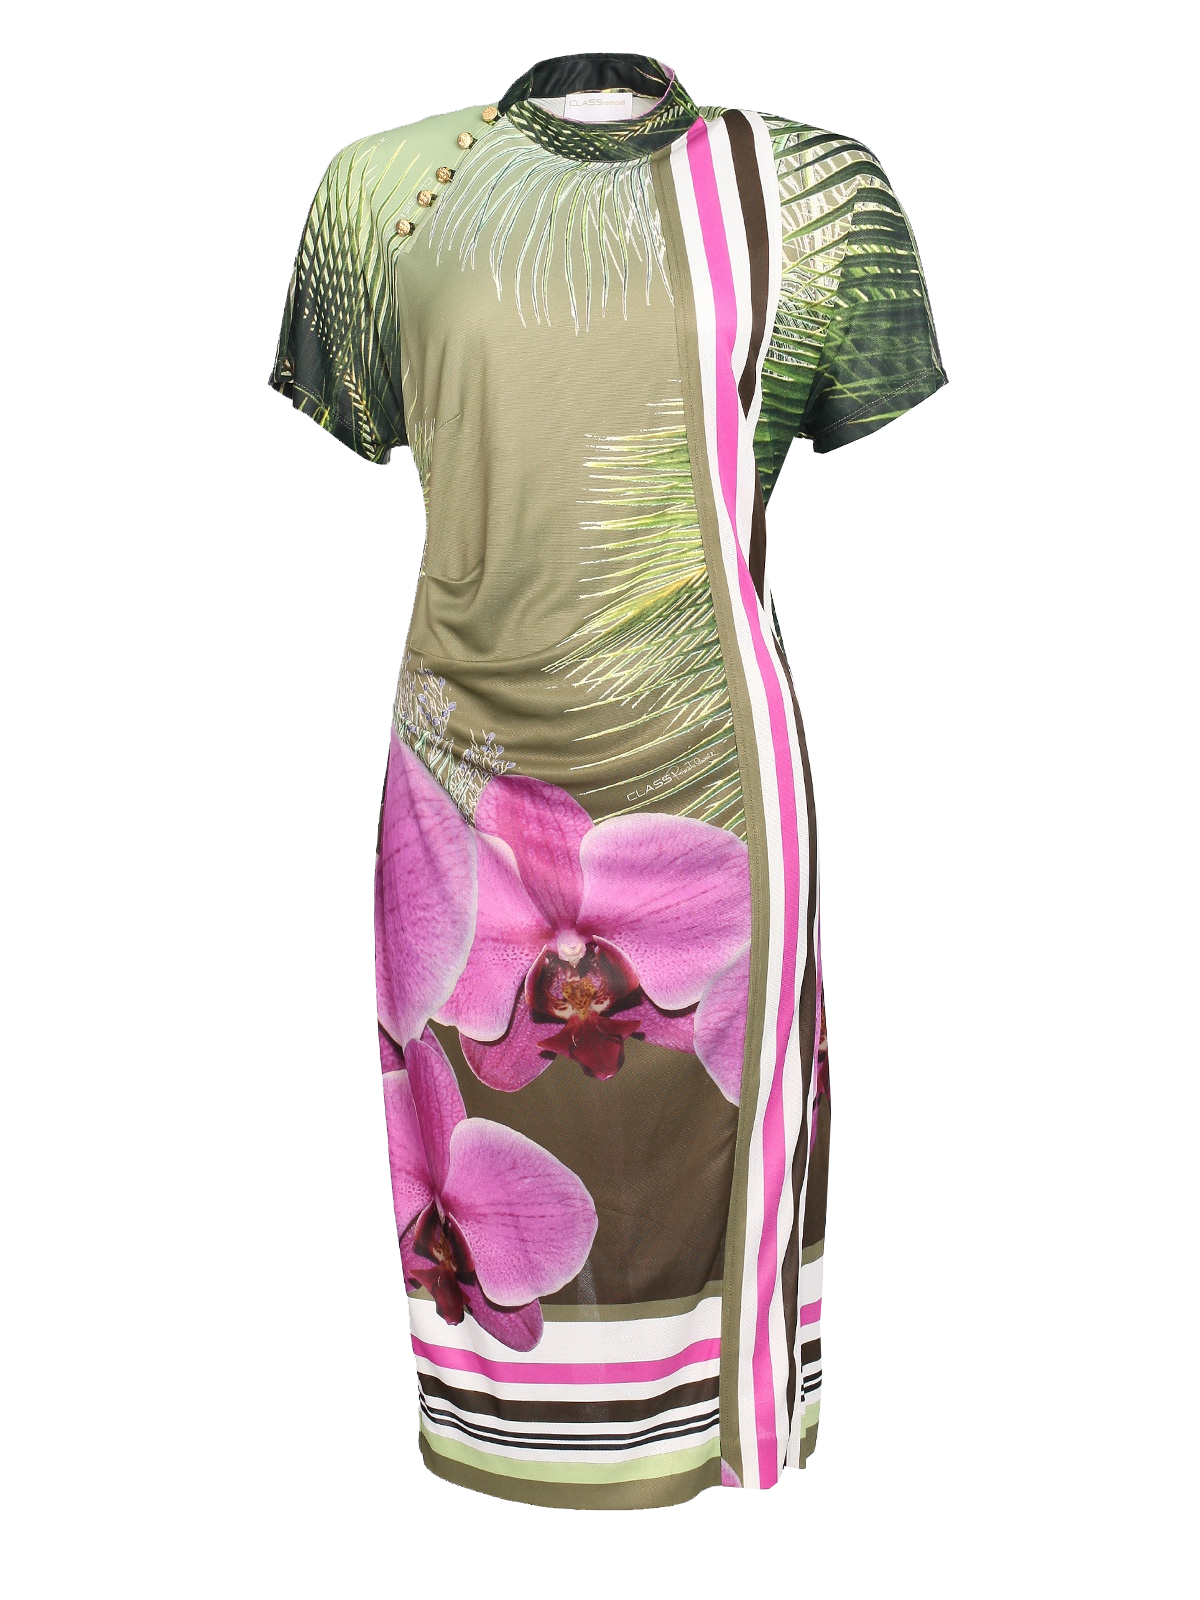 Roberto Cavalli print dress ragtag olive green pink floral